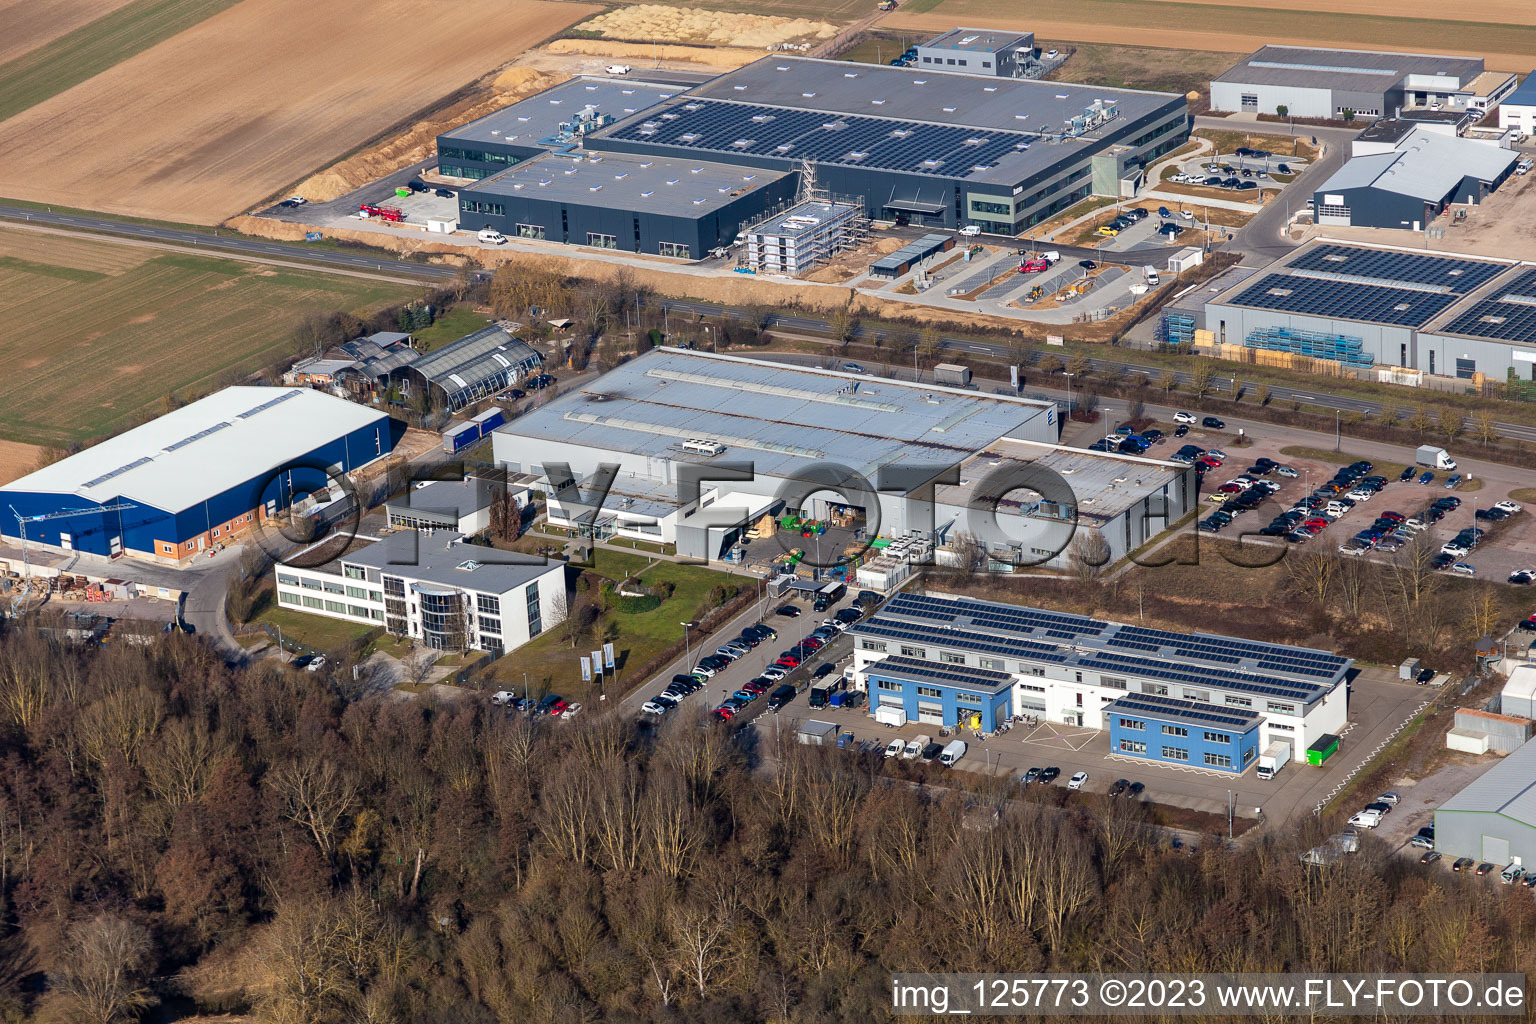 Aerial view of Eberspächer Catem GmbH. Follower of Klimm in the district Herxheim in Herxheim bei Landau/Pfalz in the state Rhineland-Palatinate, Germany